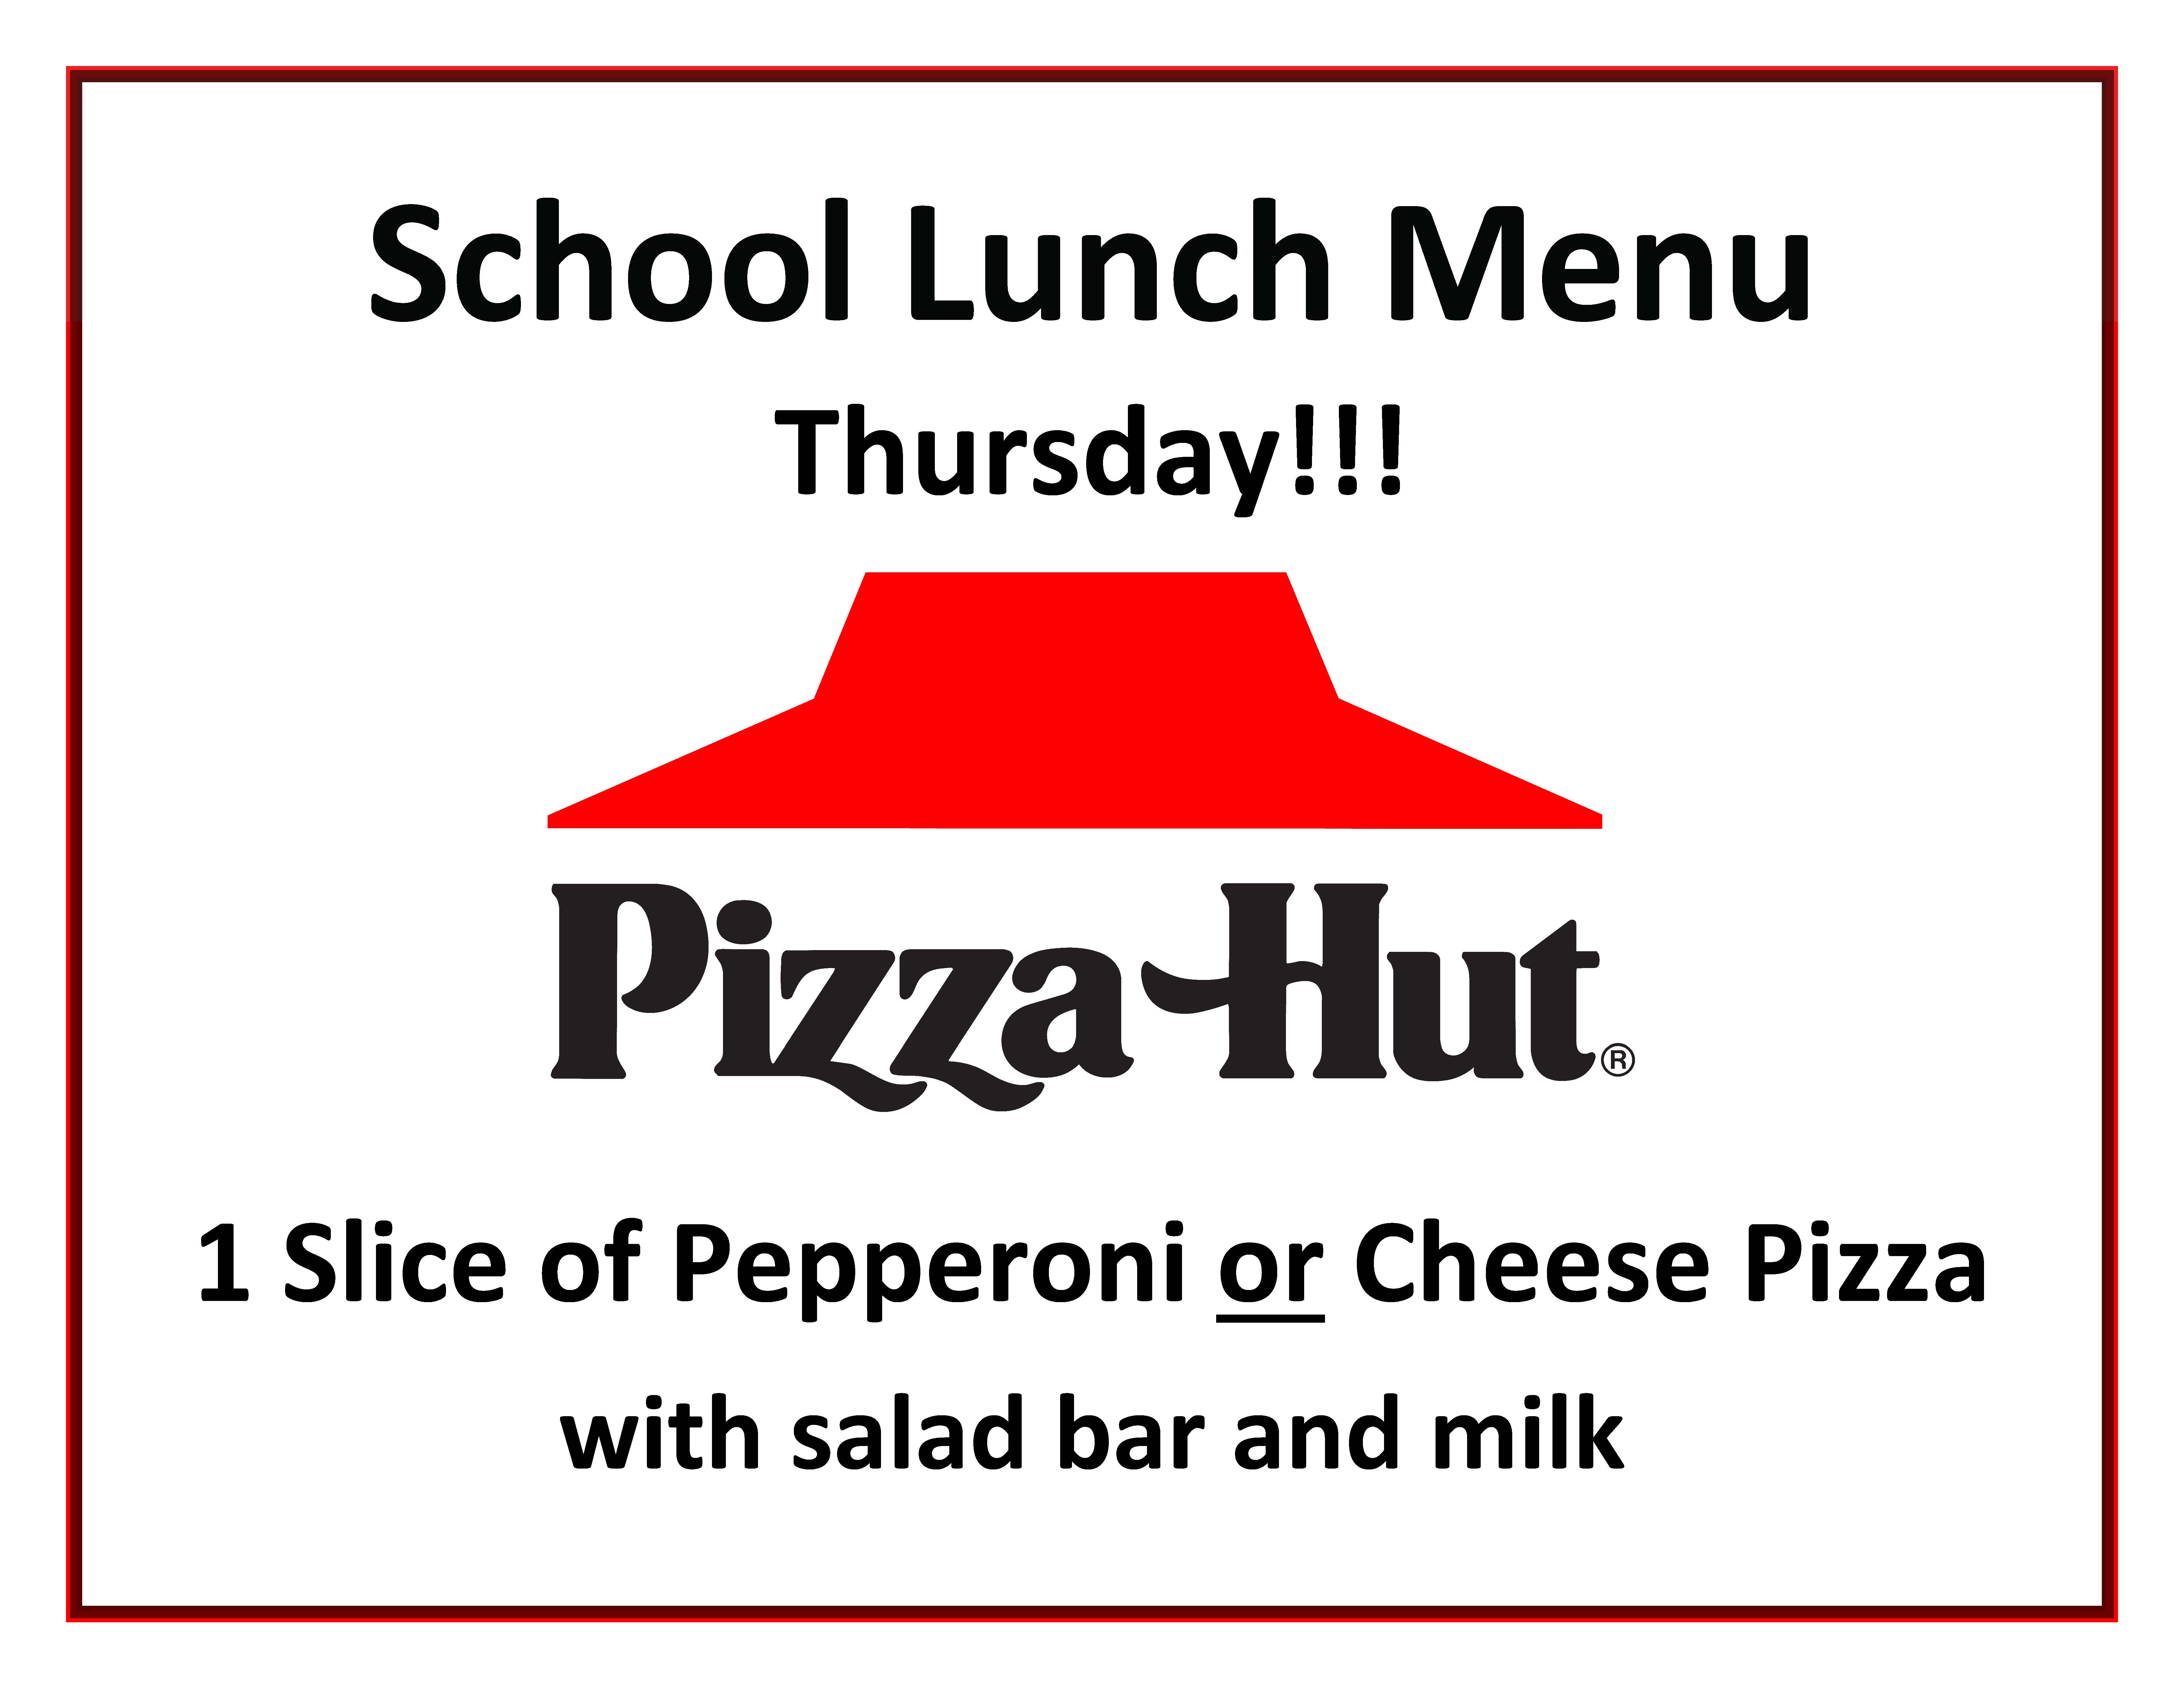 Pizza Hut Day in the school cafeteria - April 11